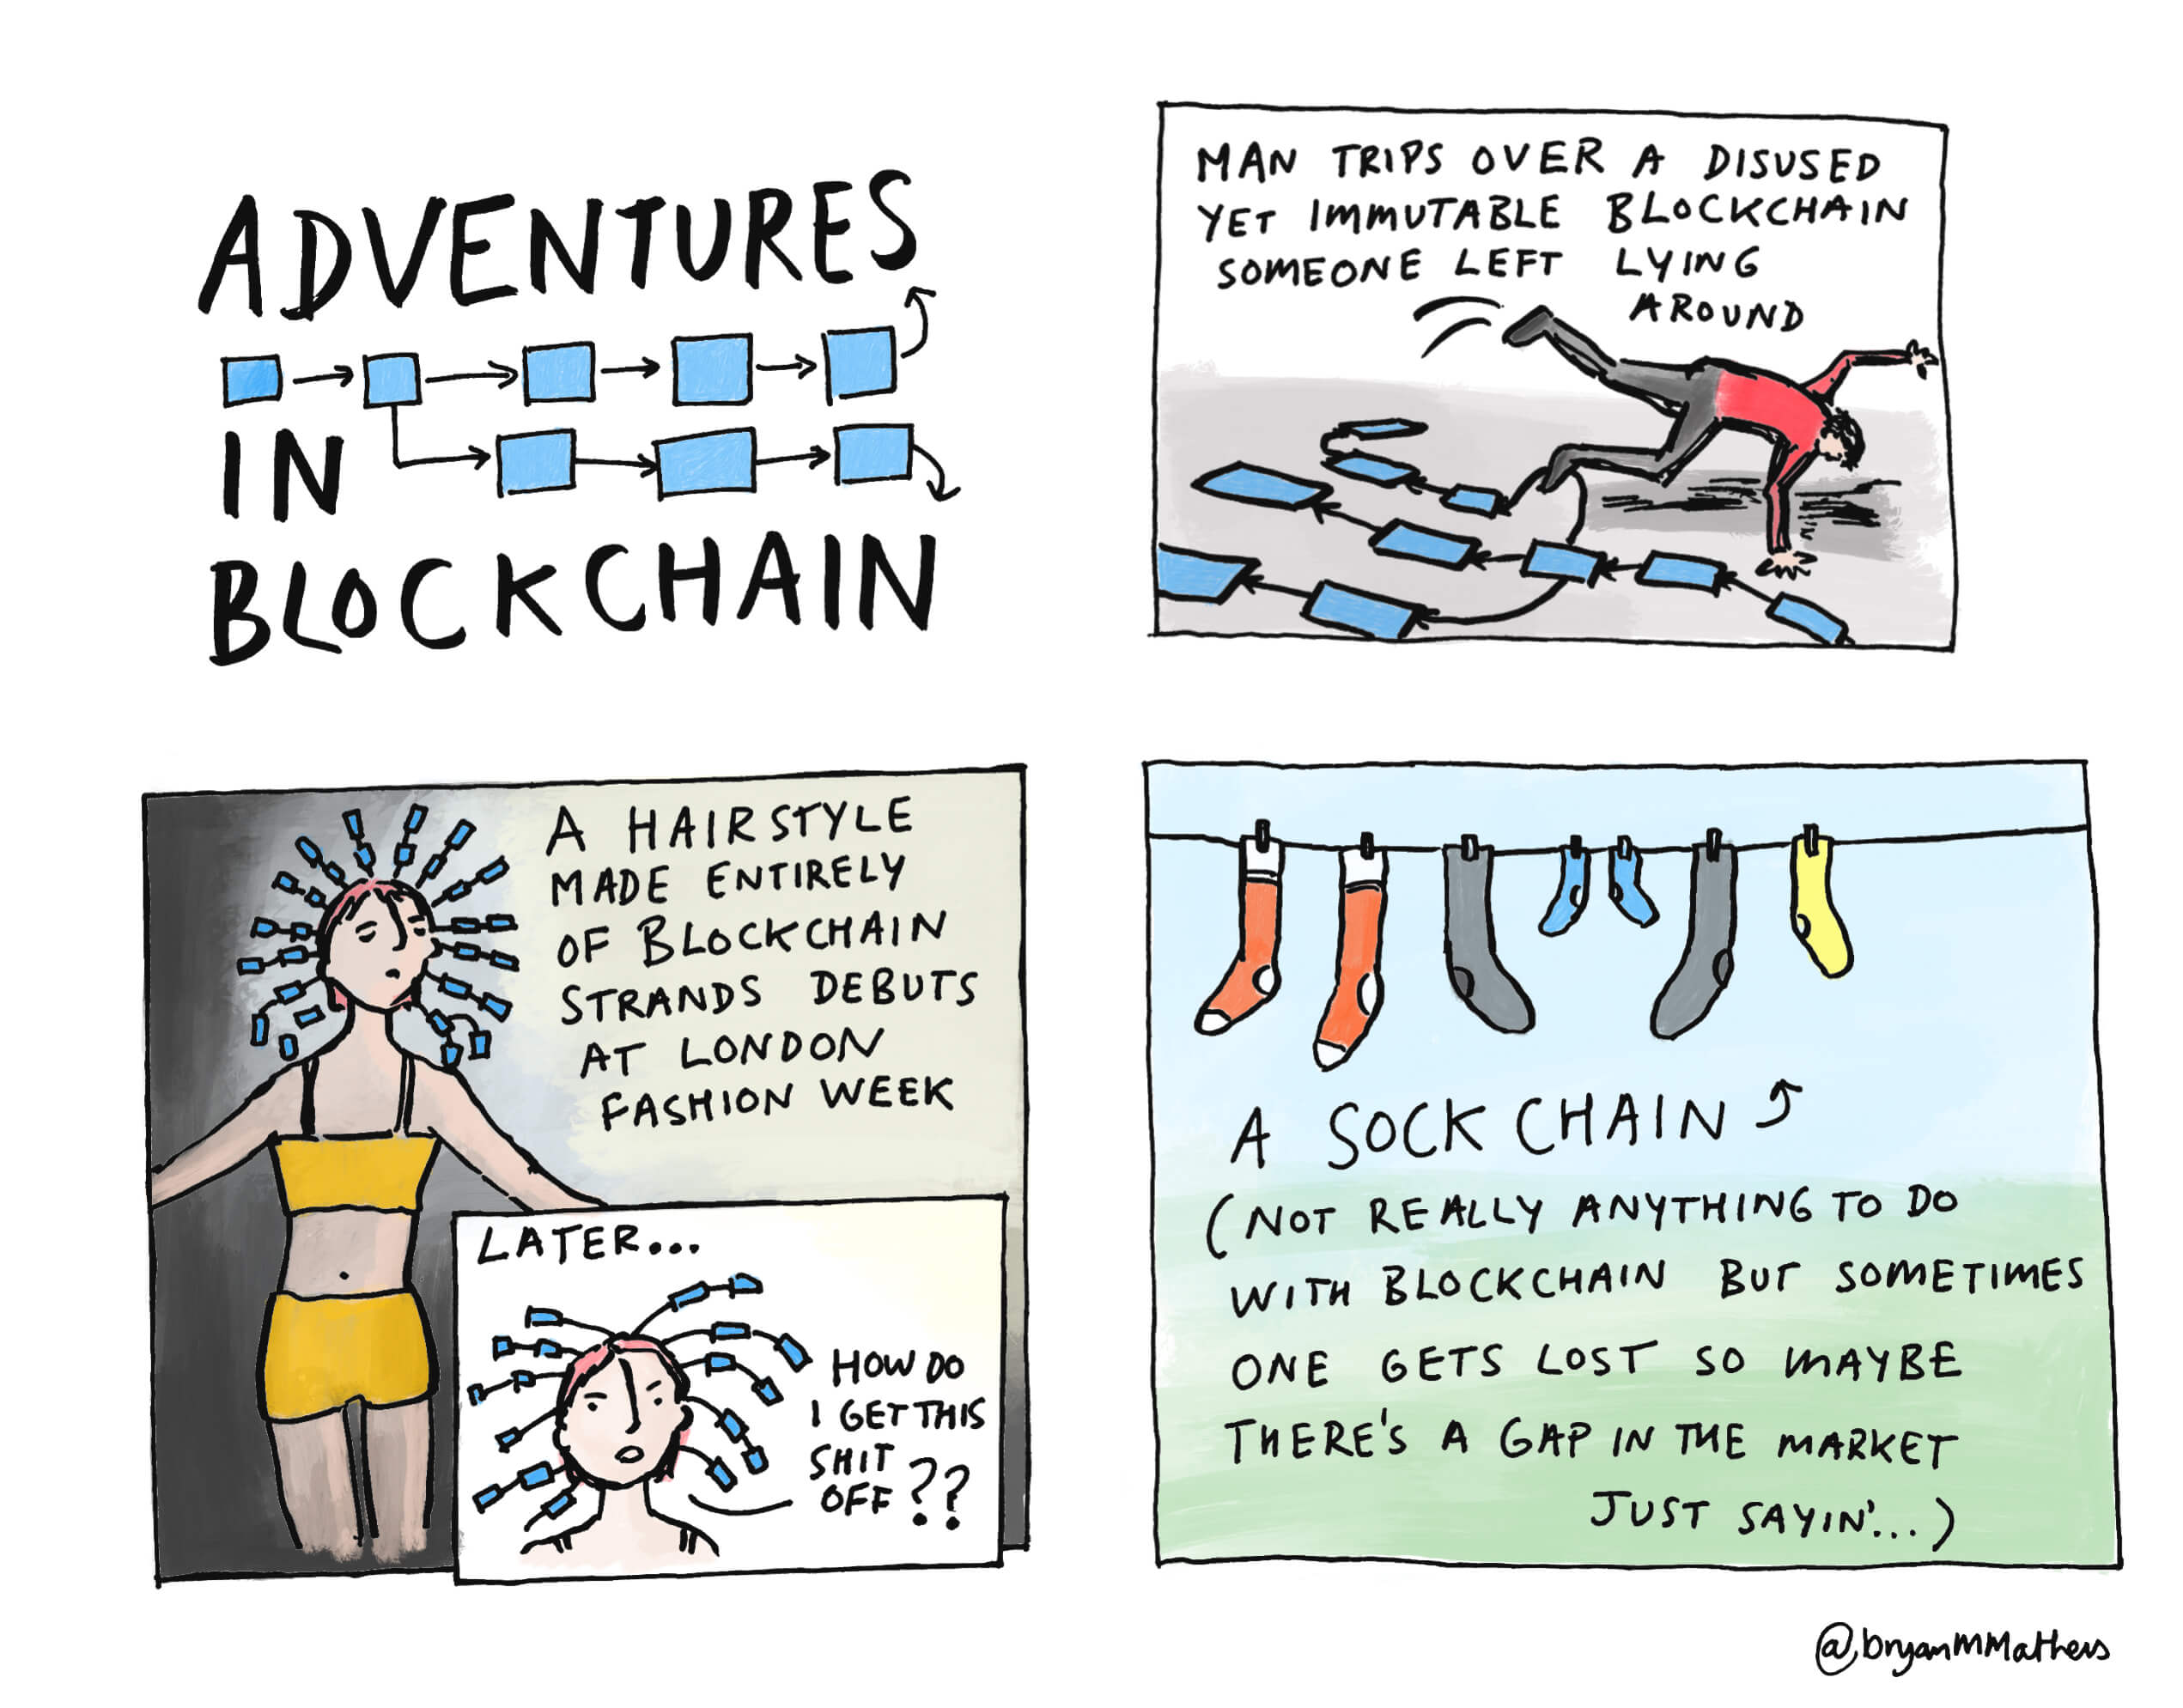 Adventures in Blockchain!